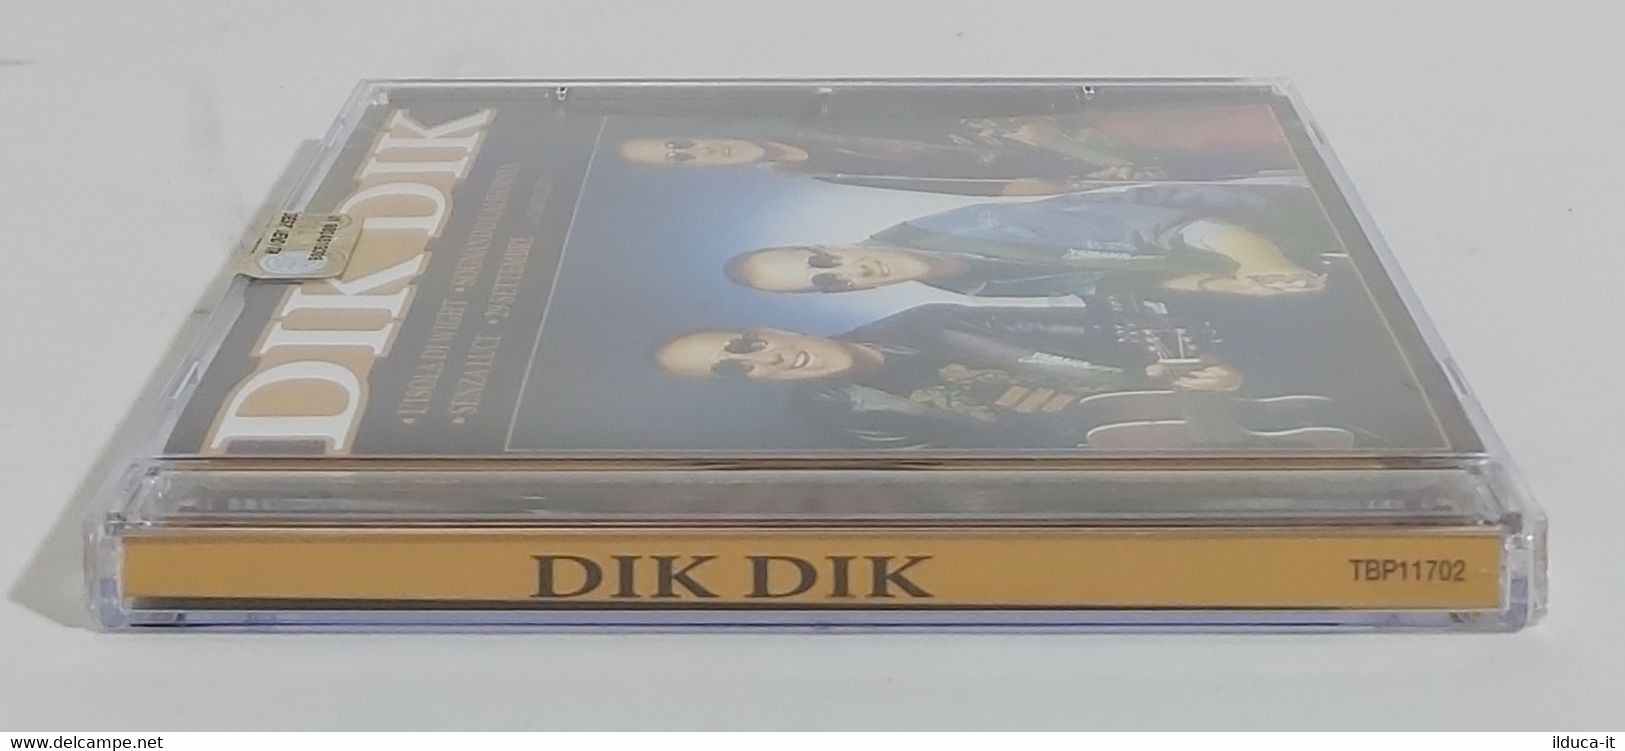 I102313 CD - DIK DIK - Azzurra Music 2011 - Sonstige - Italienische Musik